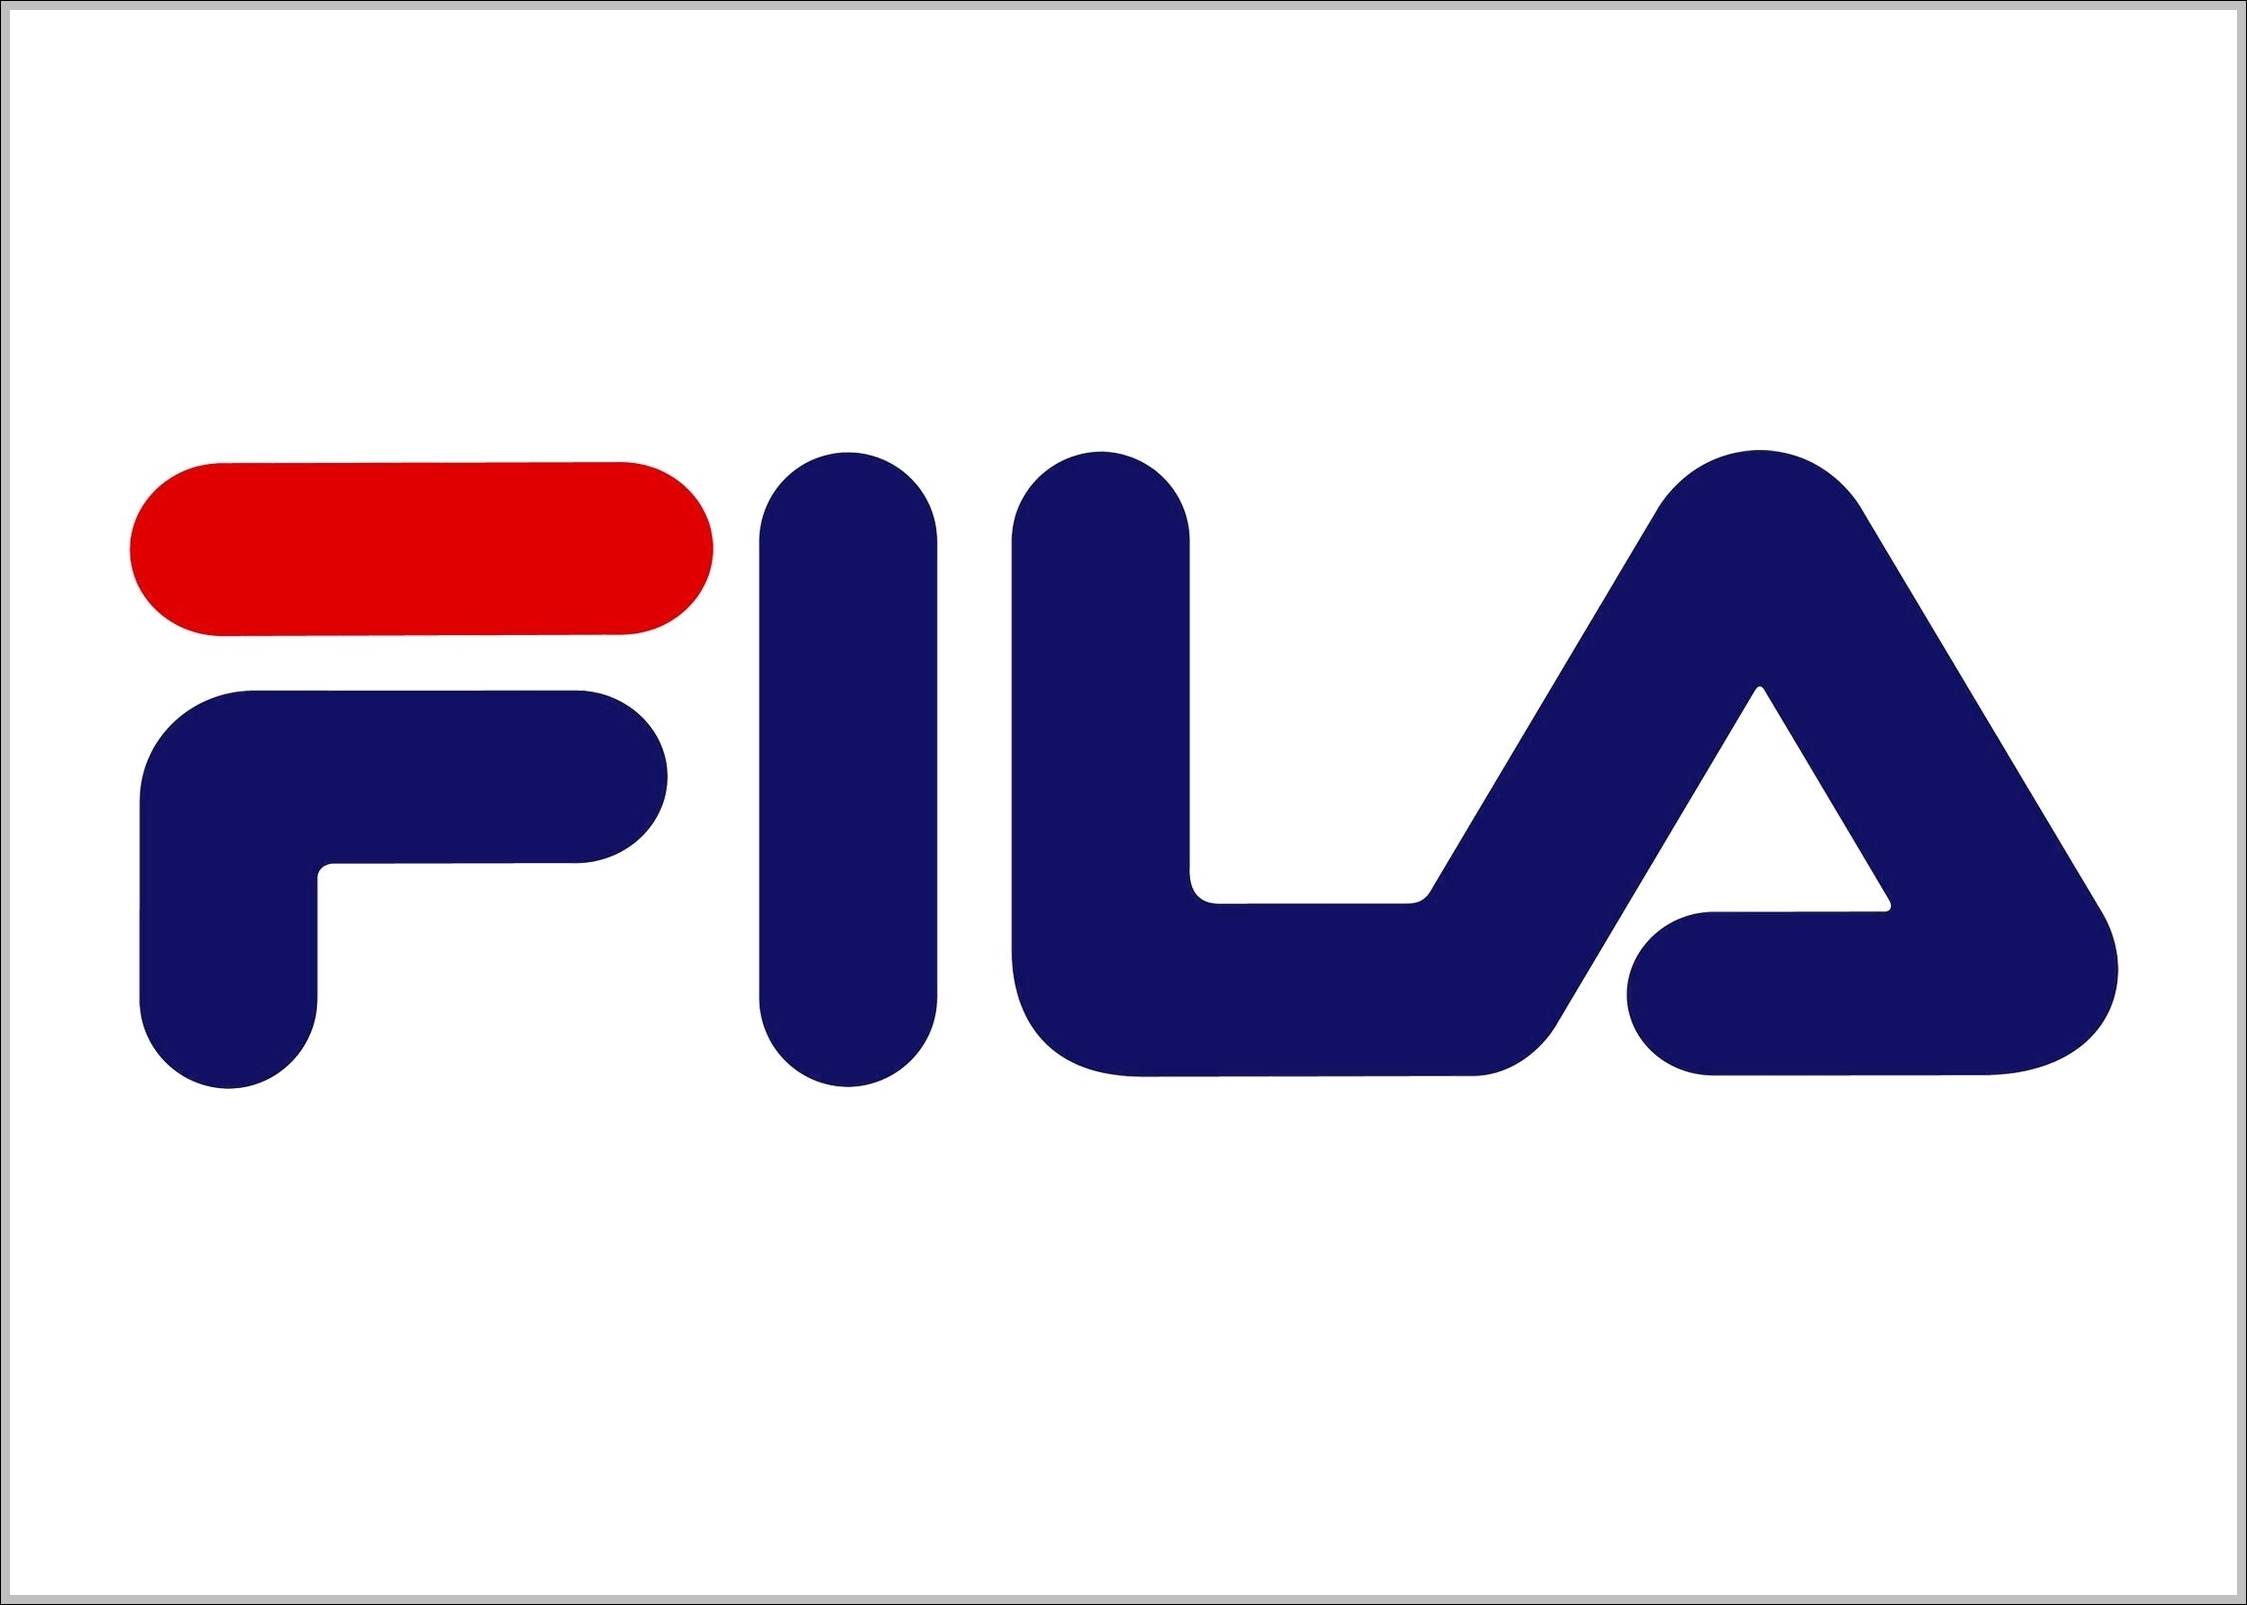 FIFA Logo - fifa symbol | Logo Sign - Logos, Signs, Symbols, Trademarks of ...